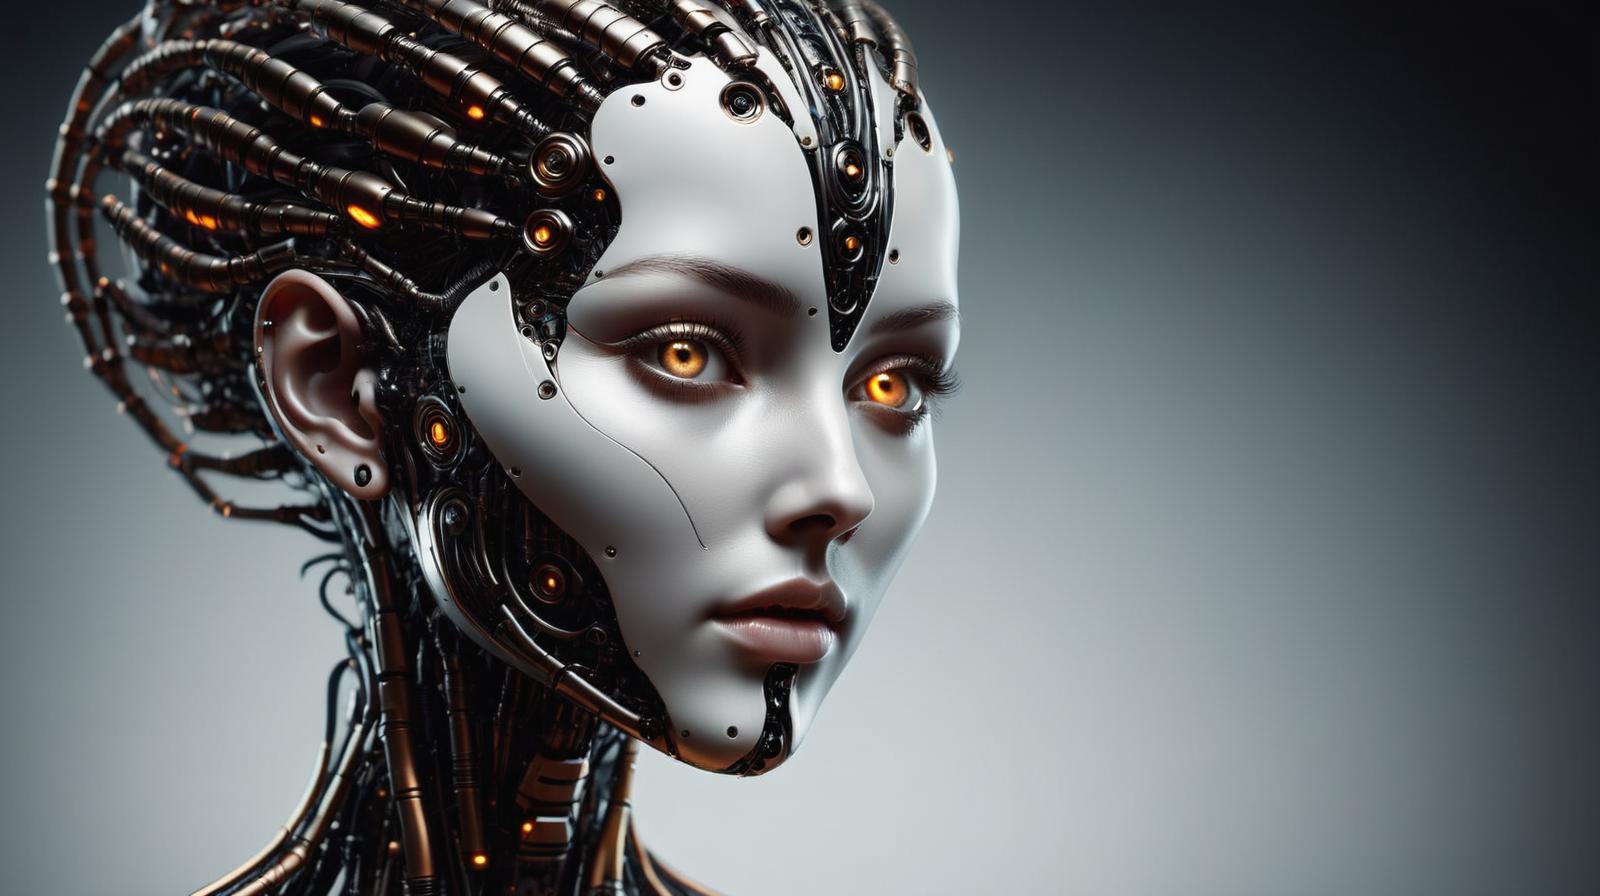 AI model image by GenX